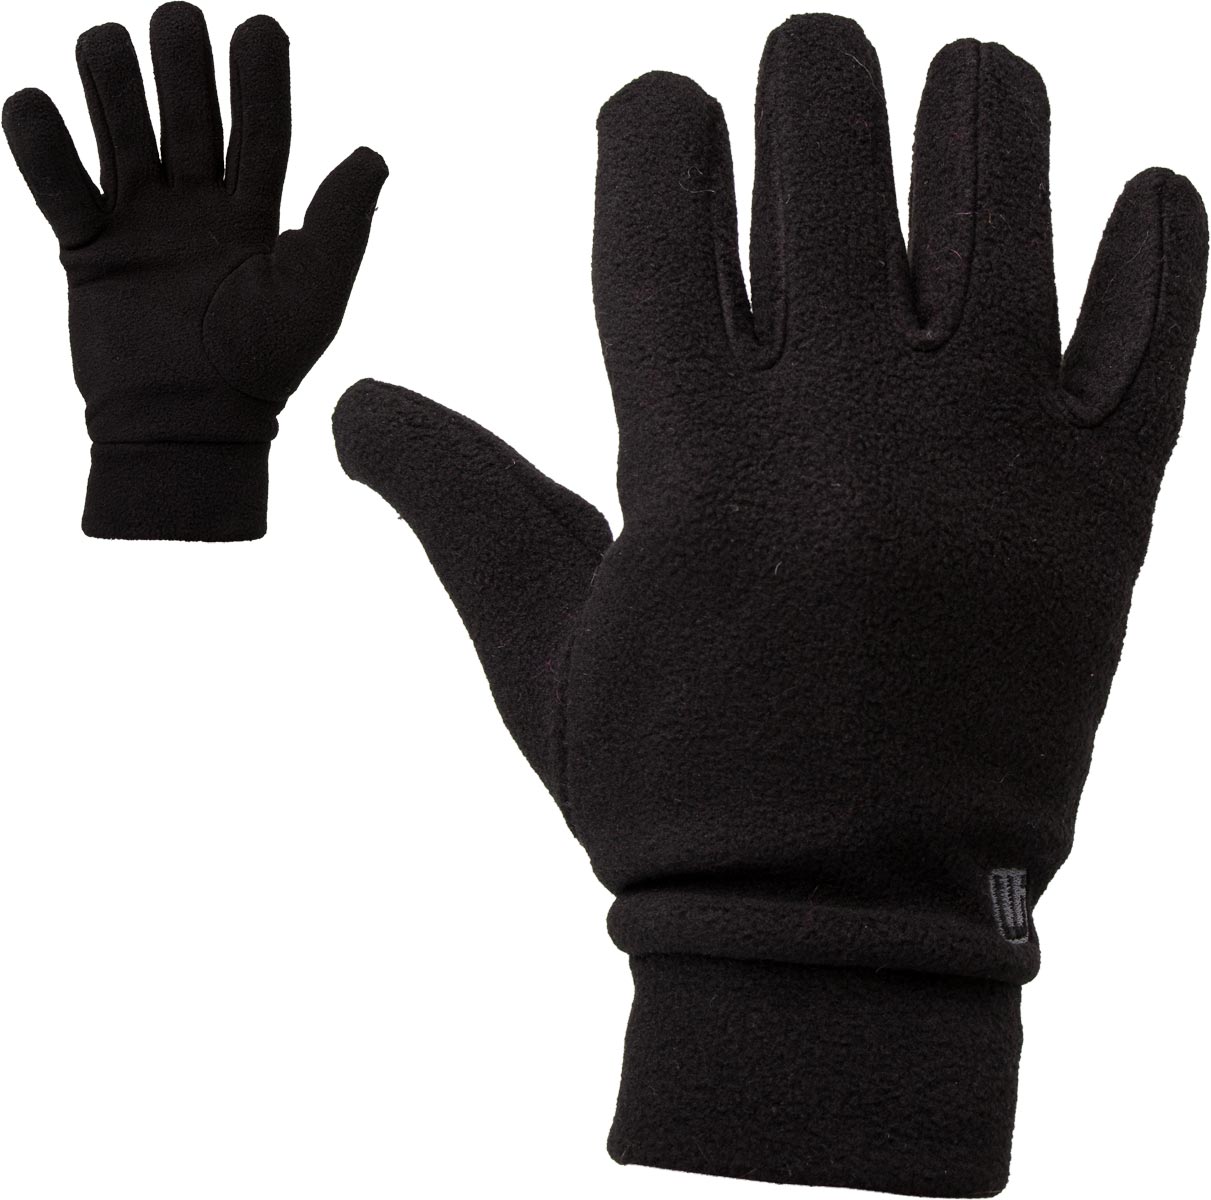 Fleecové rukavice